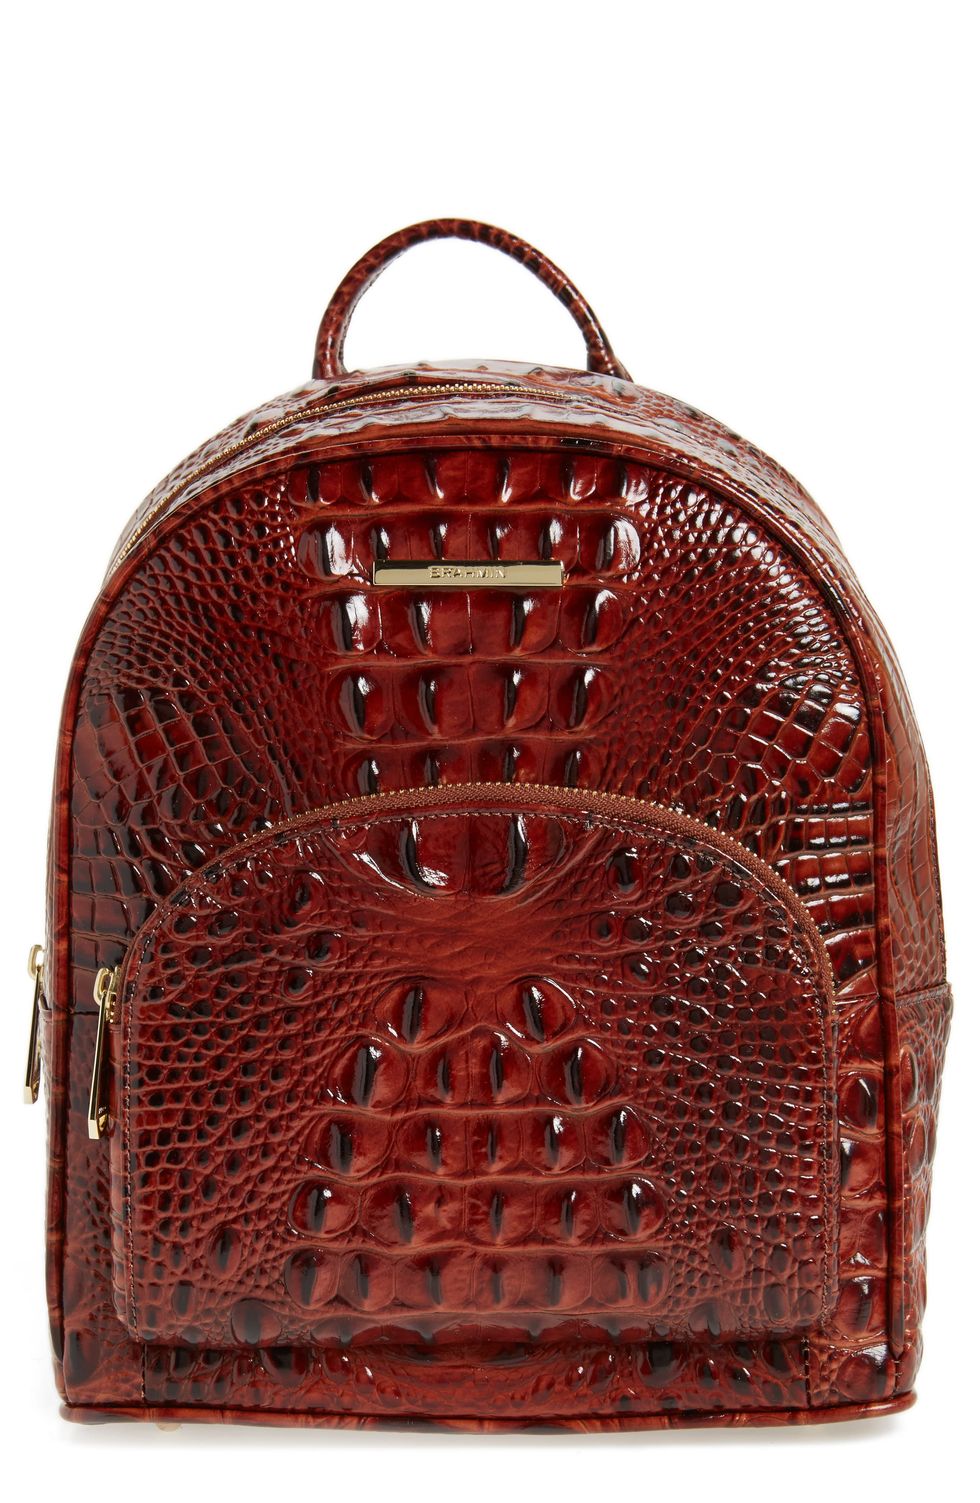 Brahmin Leather Backpacks for Women